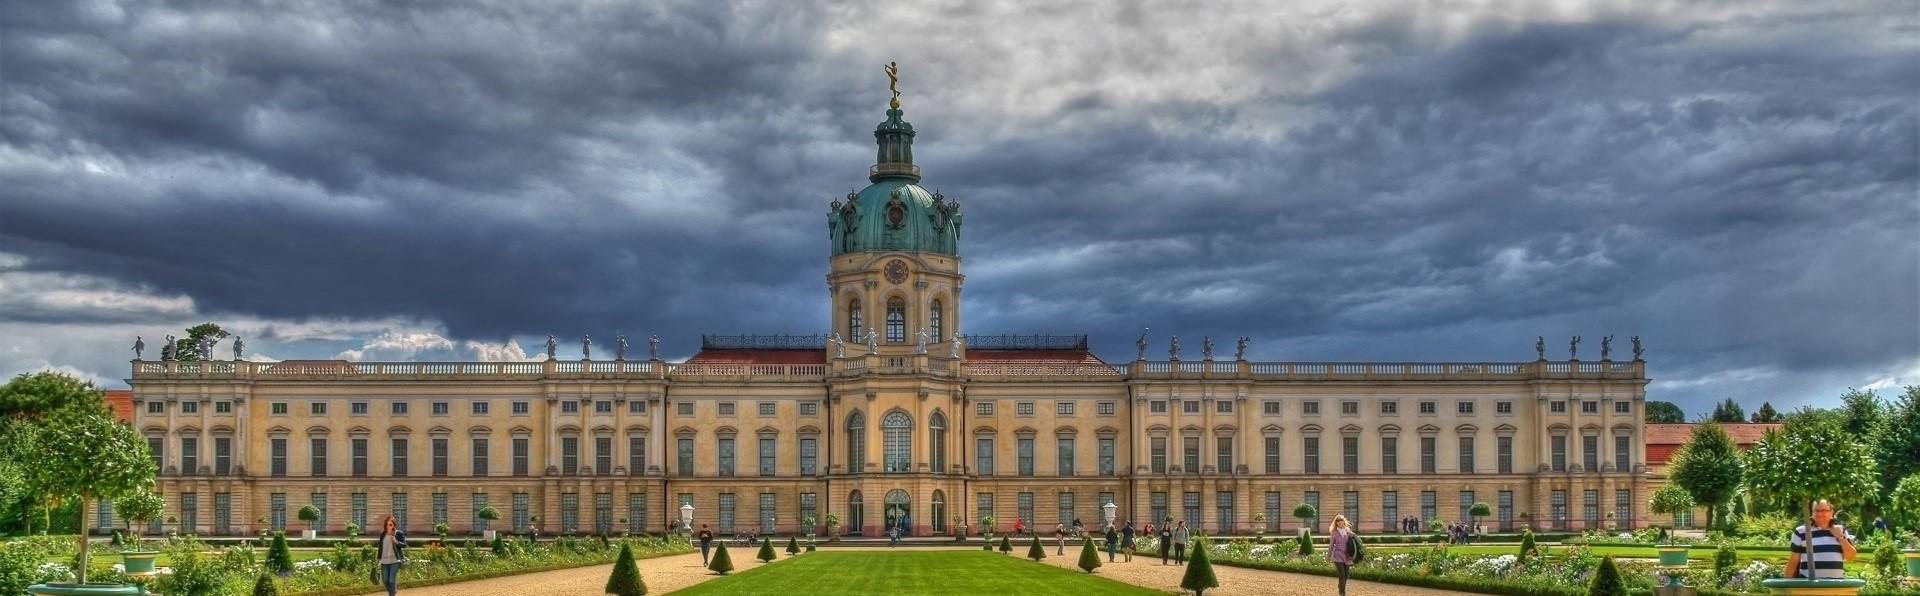 کاخ شارلوتنبورگ Charlottenburg Palace